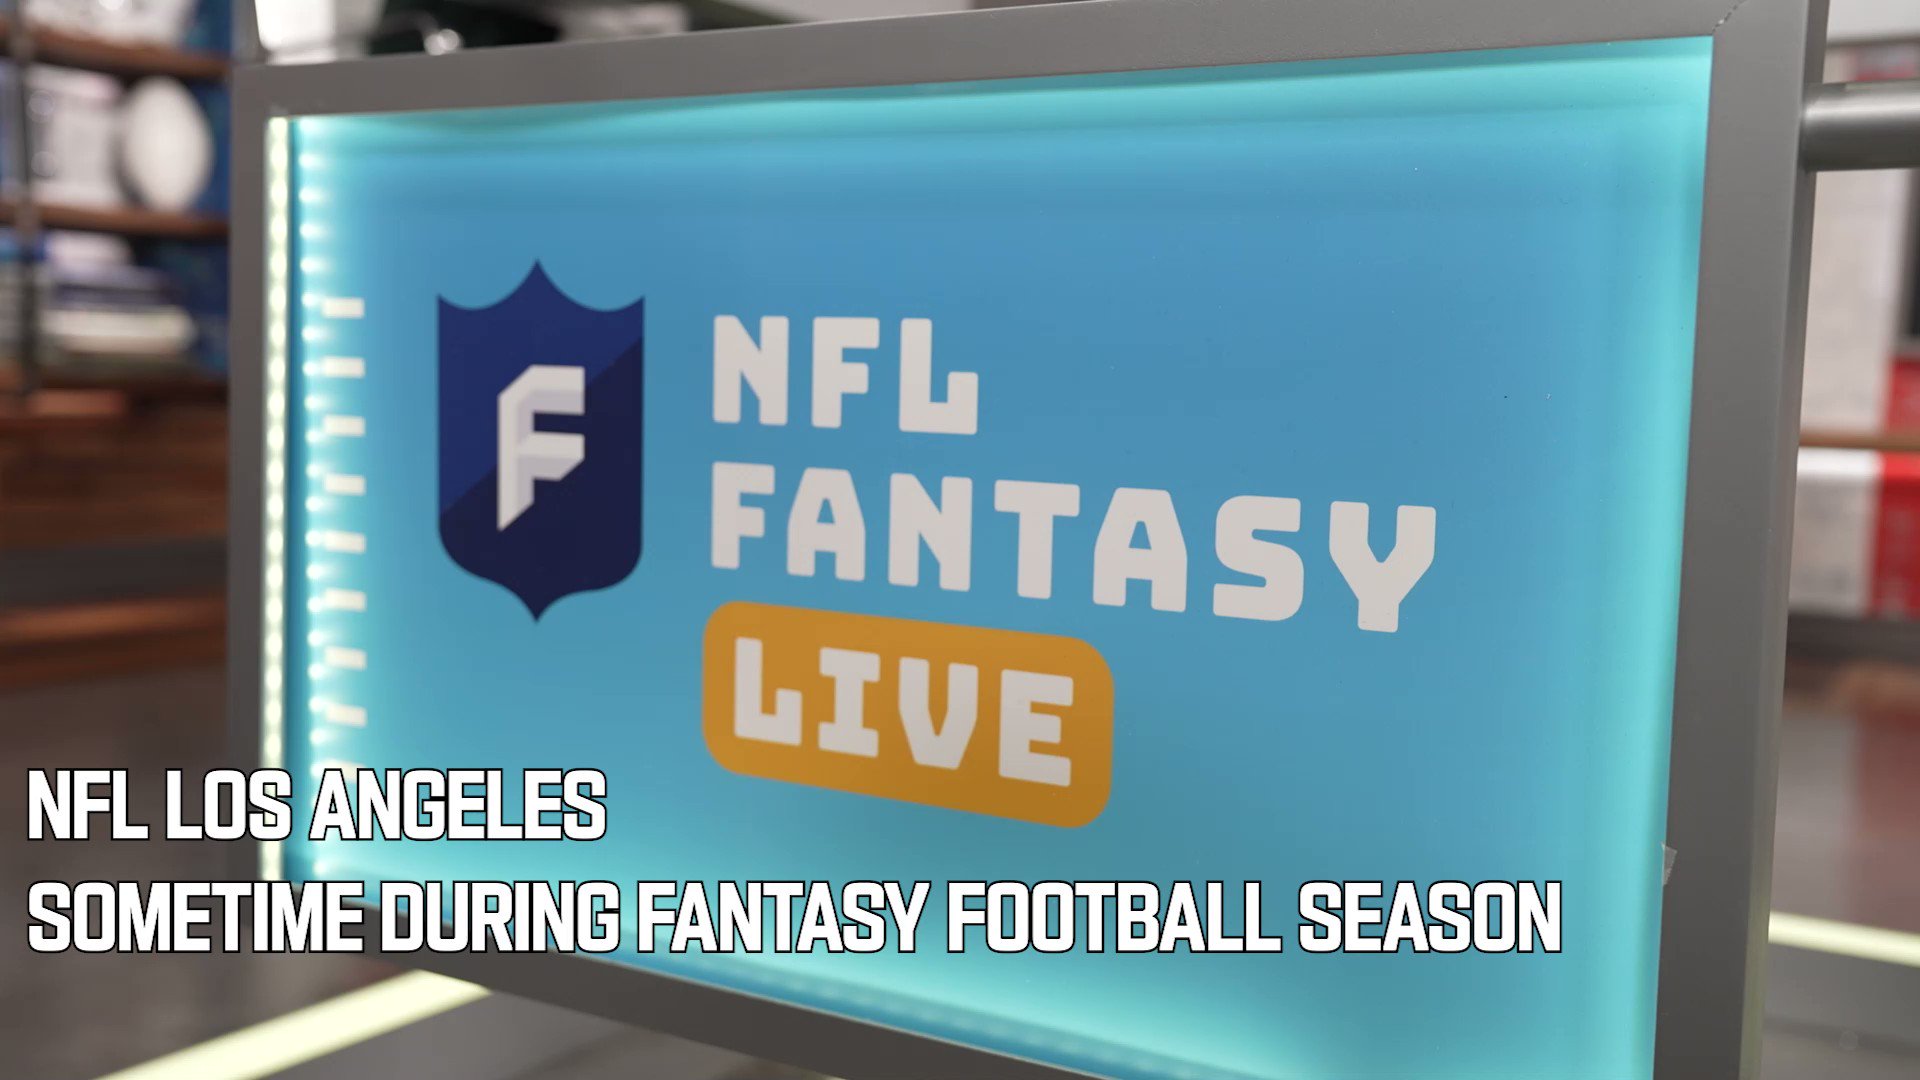 NFL Fantasy Football on X